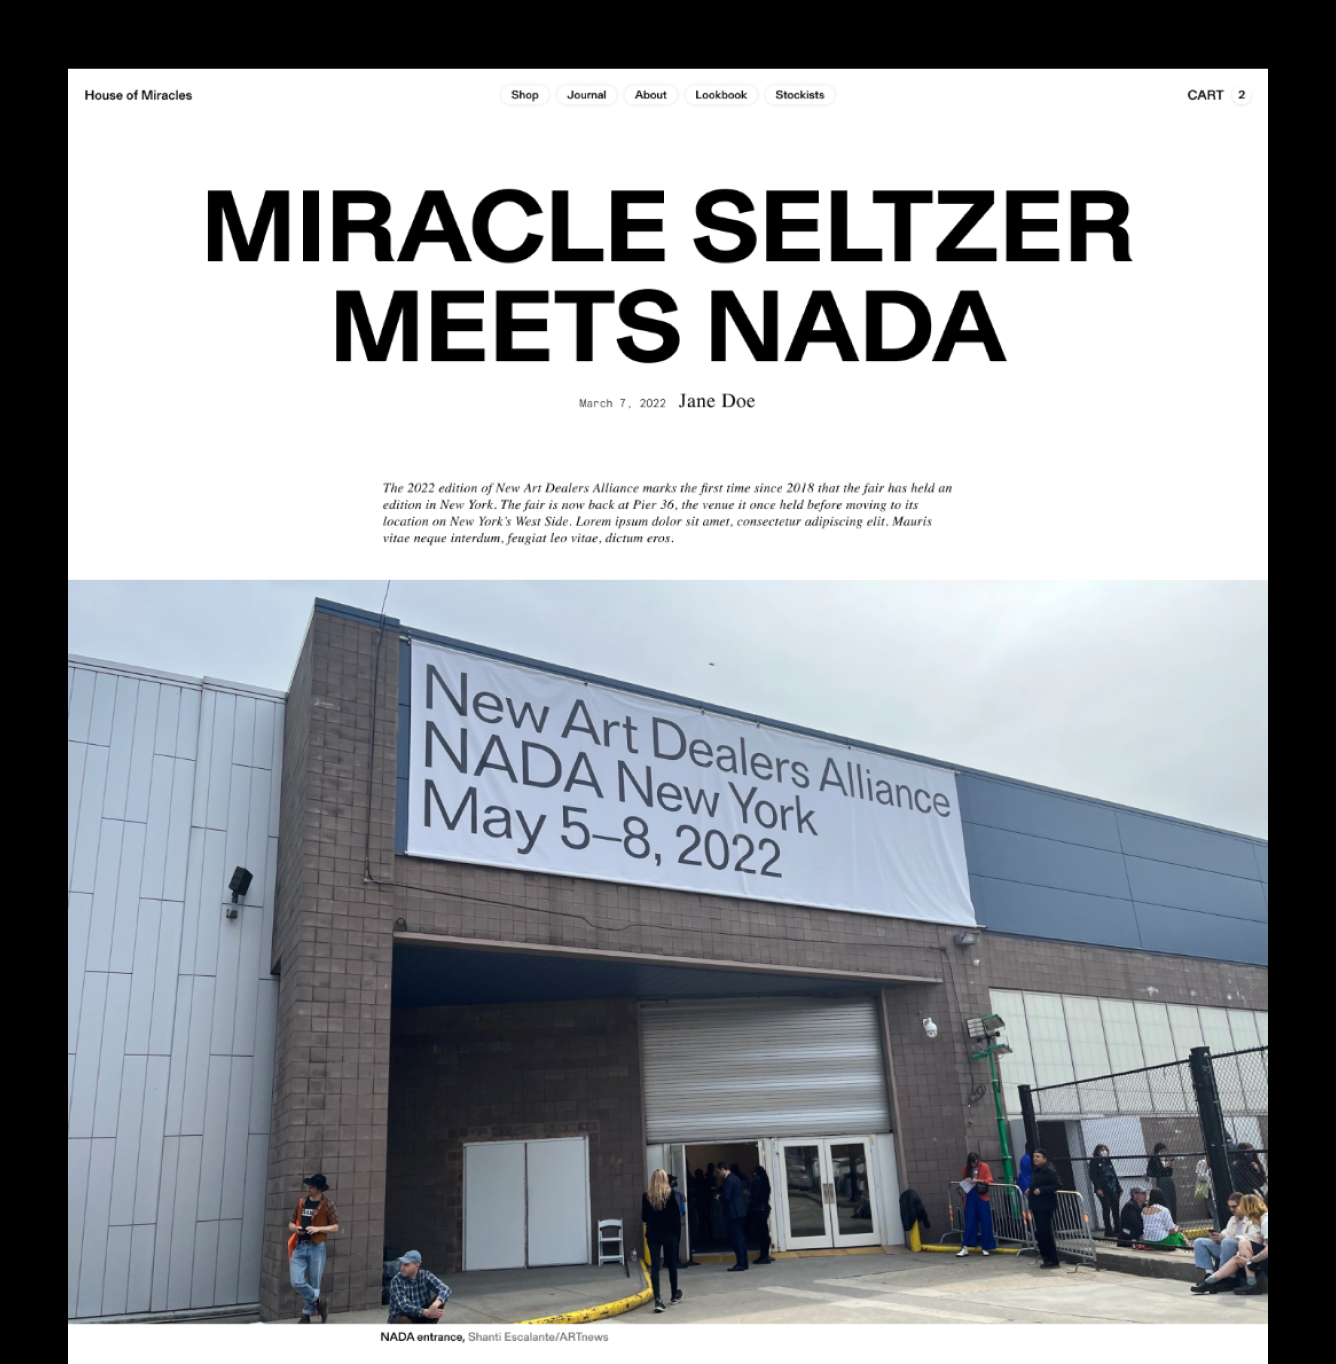 miracle seltzer website blog post reading "Miracle Seltzer Meets NADA"